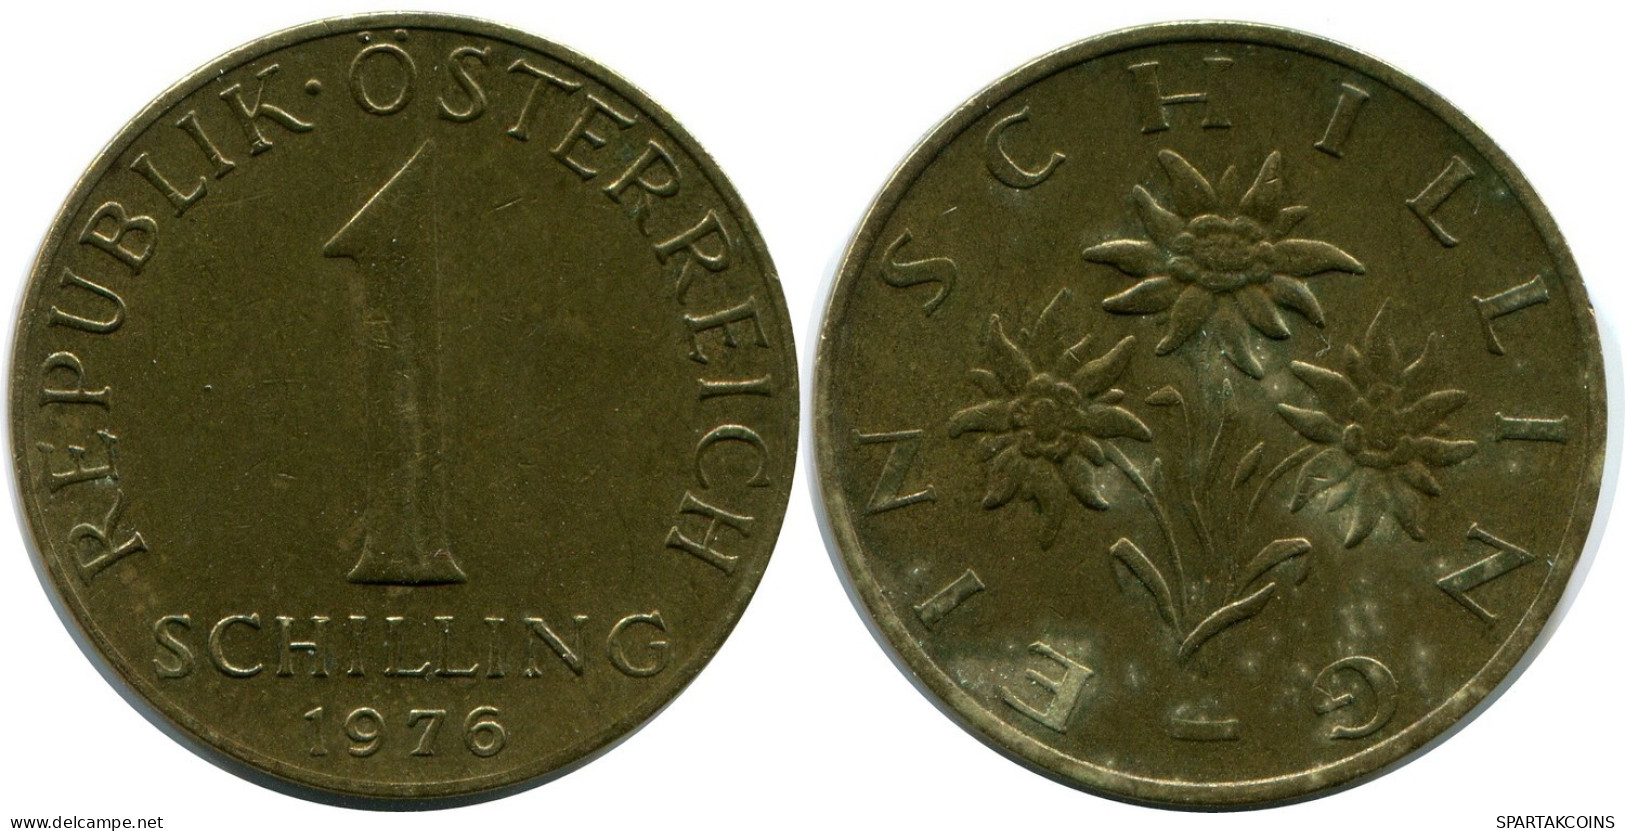 1 SCHILLING 1976 AUSTRIA Coin #AW811.U.A - Autriche